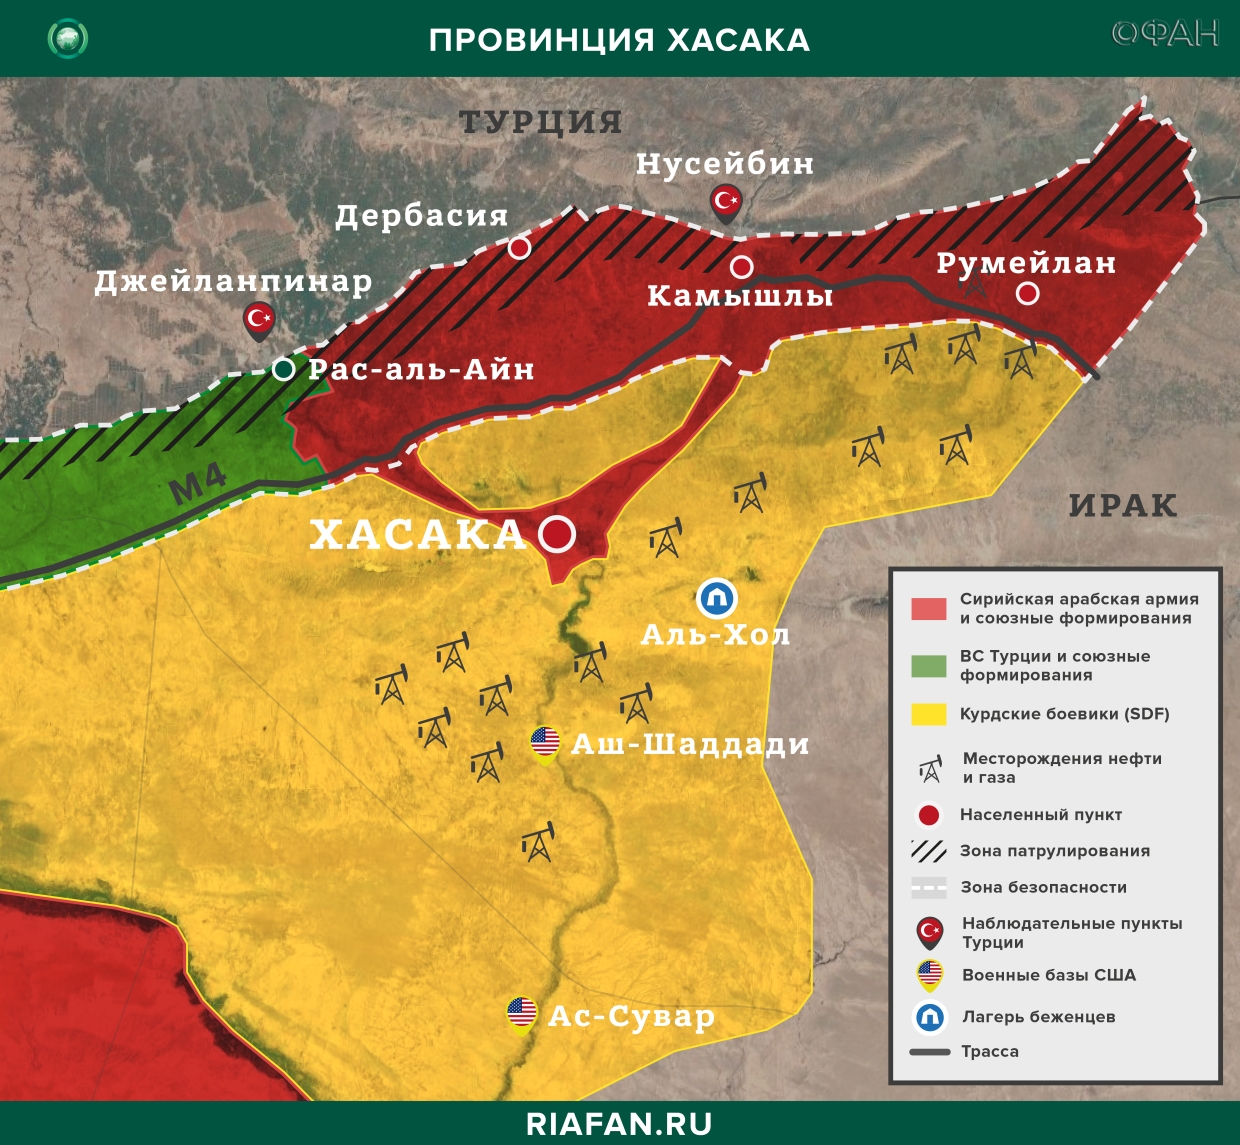 Syria news 8 Martha 22.30: Kurdish militants fired peaceful demonstrators in Deir ez-Zor, attack on the signal box SDF in Hasakah